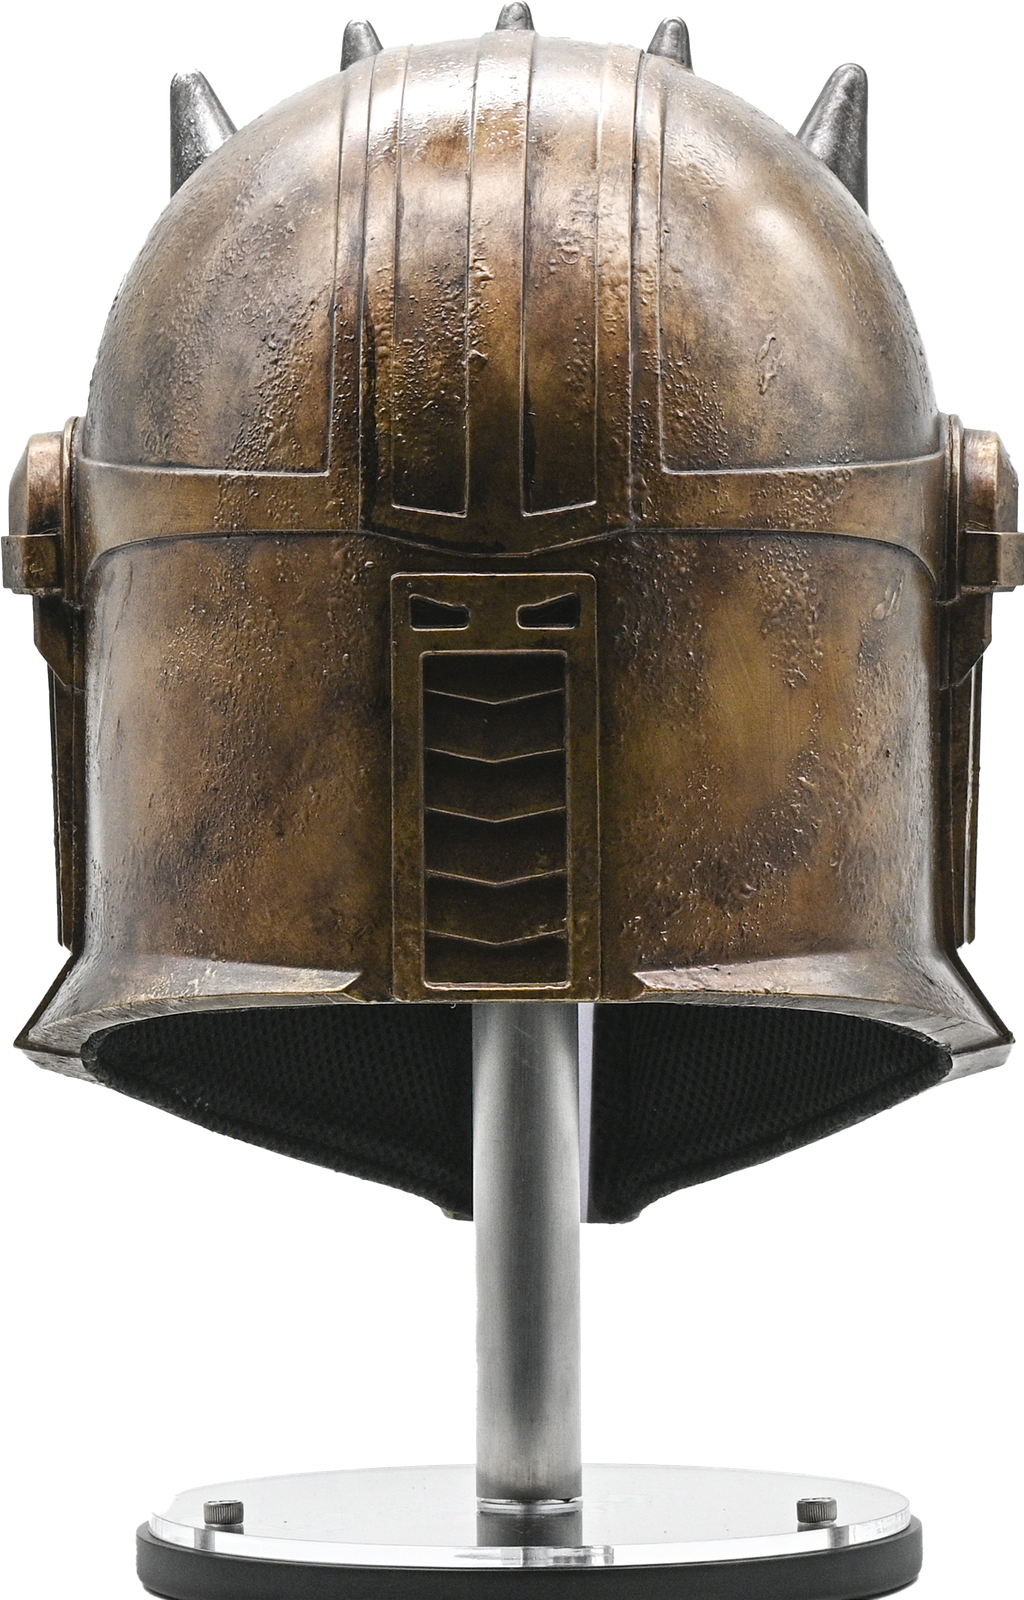 The Mandalorian The Armorer Limited Edition Fiberglass Helmet by EFX